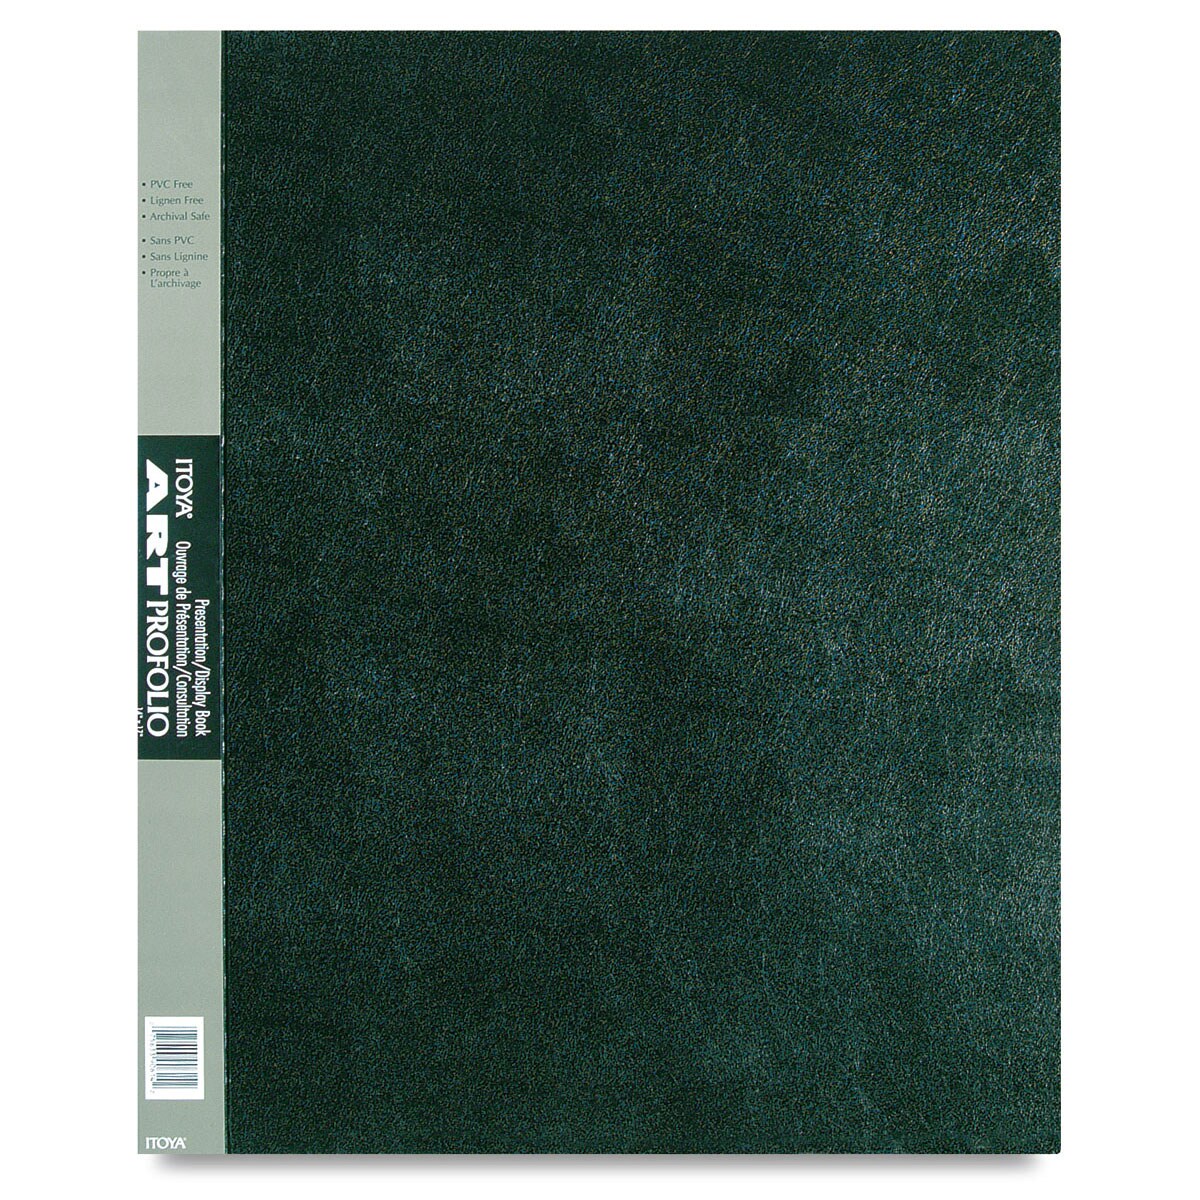 Itoya Art Profolio Presentation Book with Pocket Pages, Black